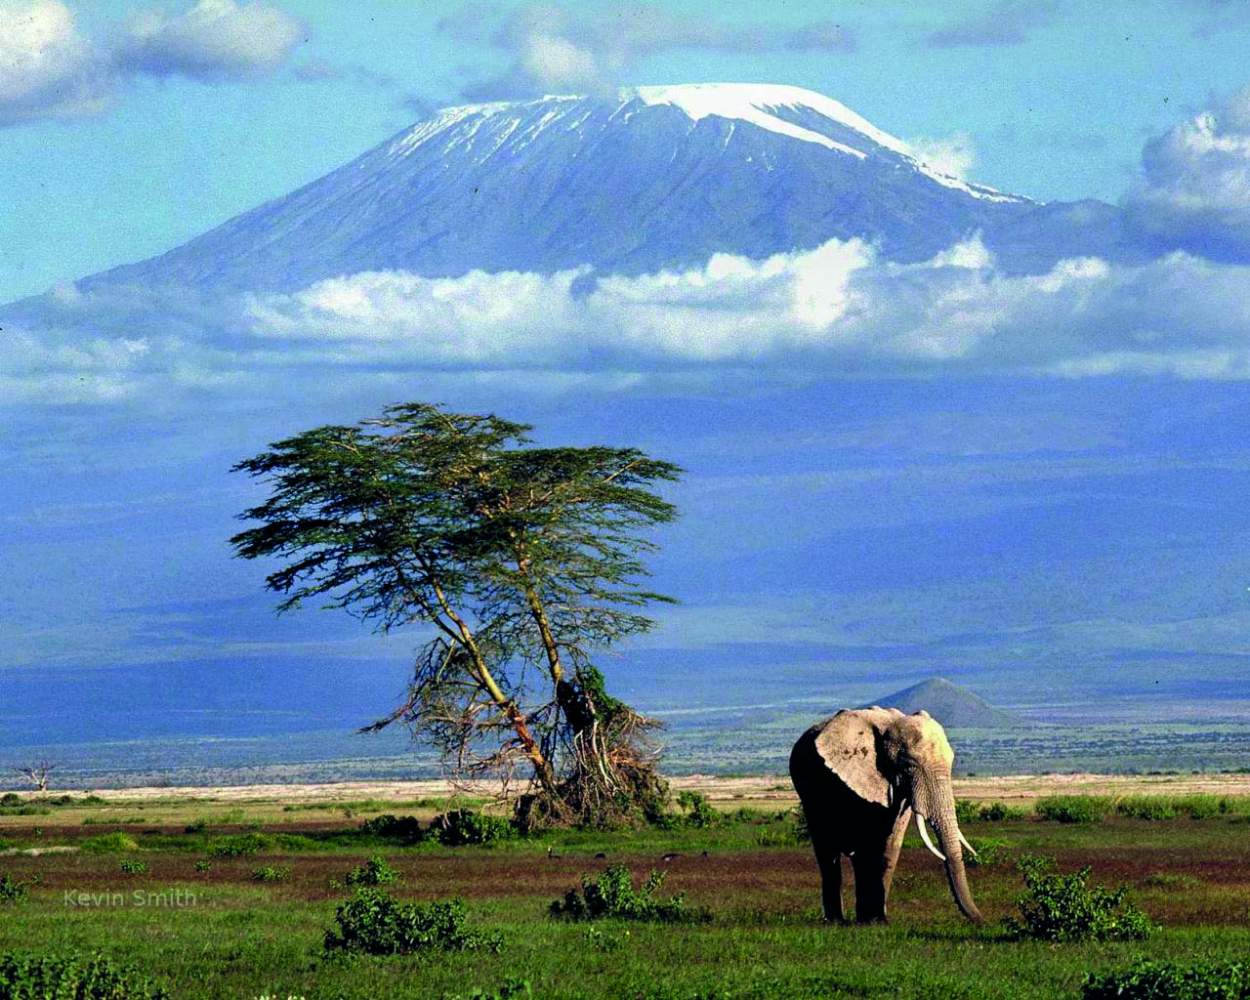 Safari von Tansania Rundreise Nach Kenia mit dem Reiseanbieter overcross